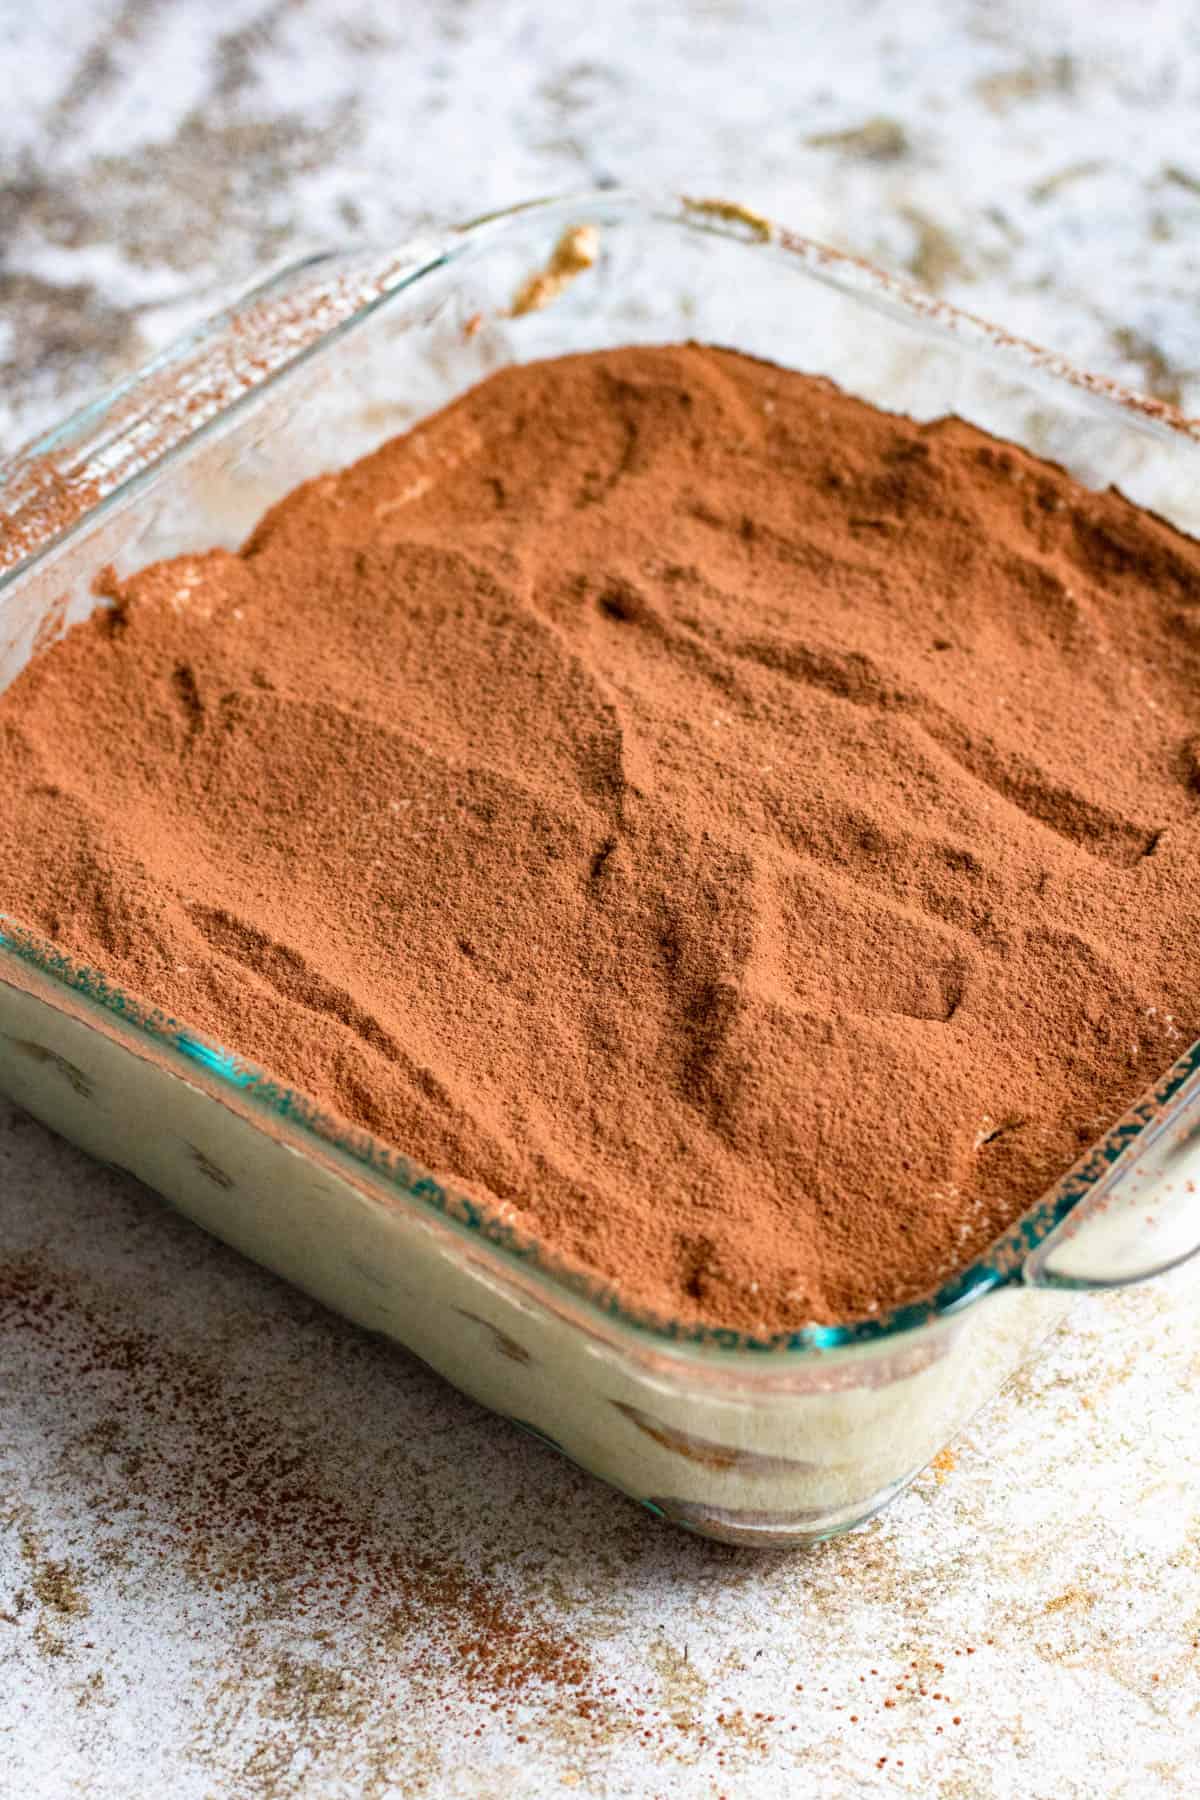 Cocoa powder layered over the top of the mascarpone creamy filling to finish the easy tiramisu recipe. 